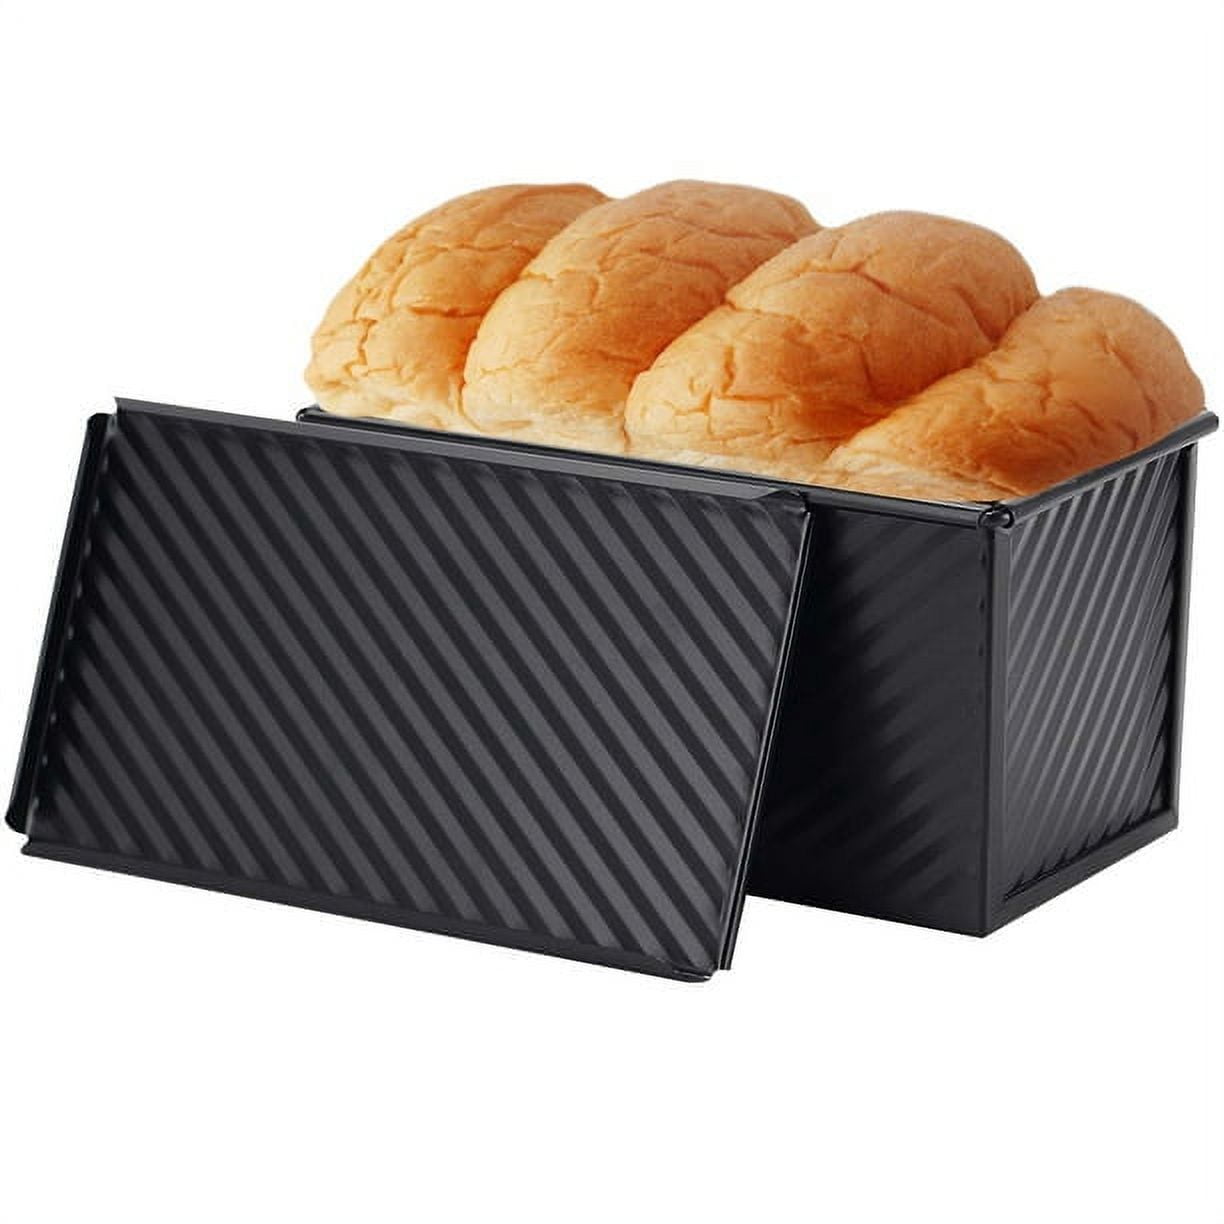 Non-stick Baking Pan Lid, Bread Baking Mold Lid